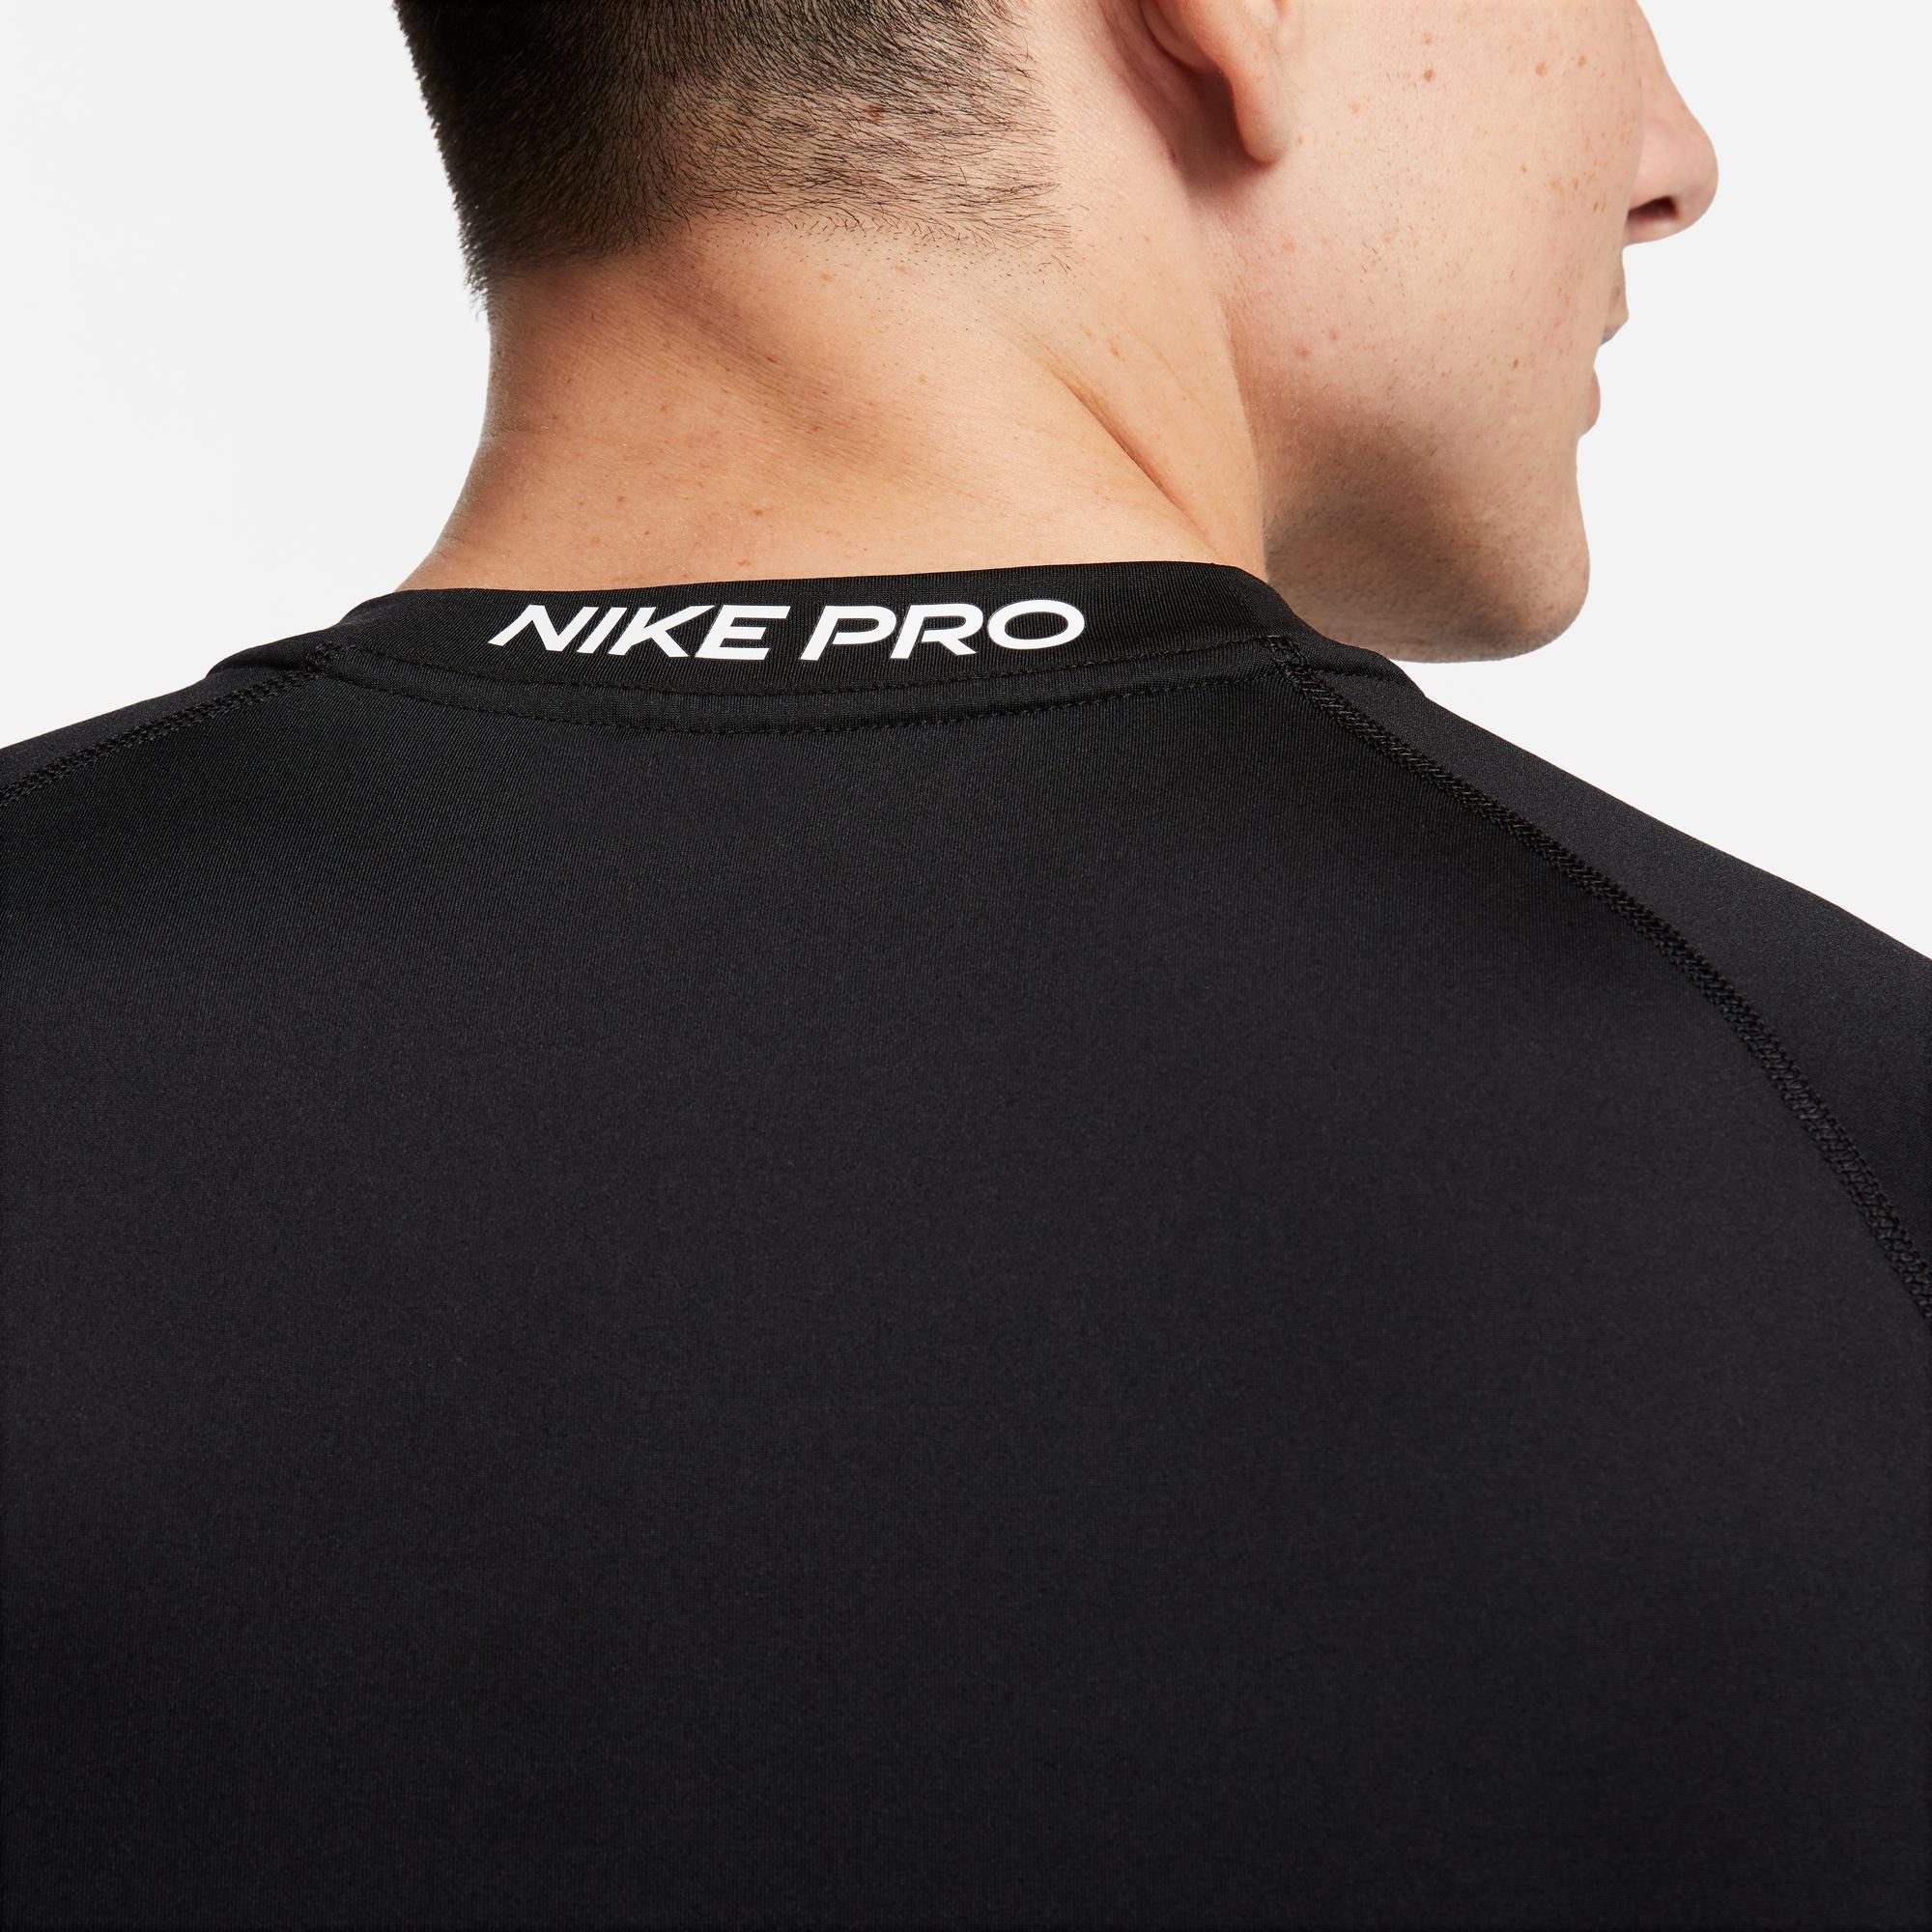 MEN'S SLIM DRI-FIT Nike PRO SHORT-SLEEVE Trainingsshirt TOP